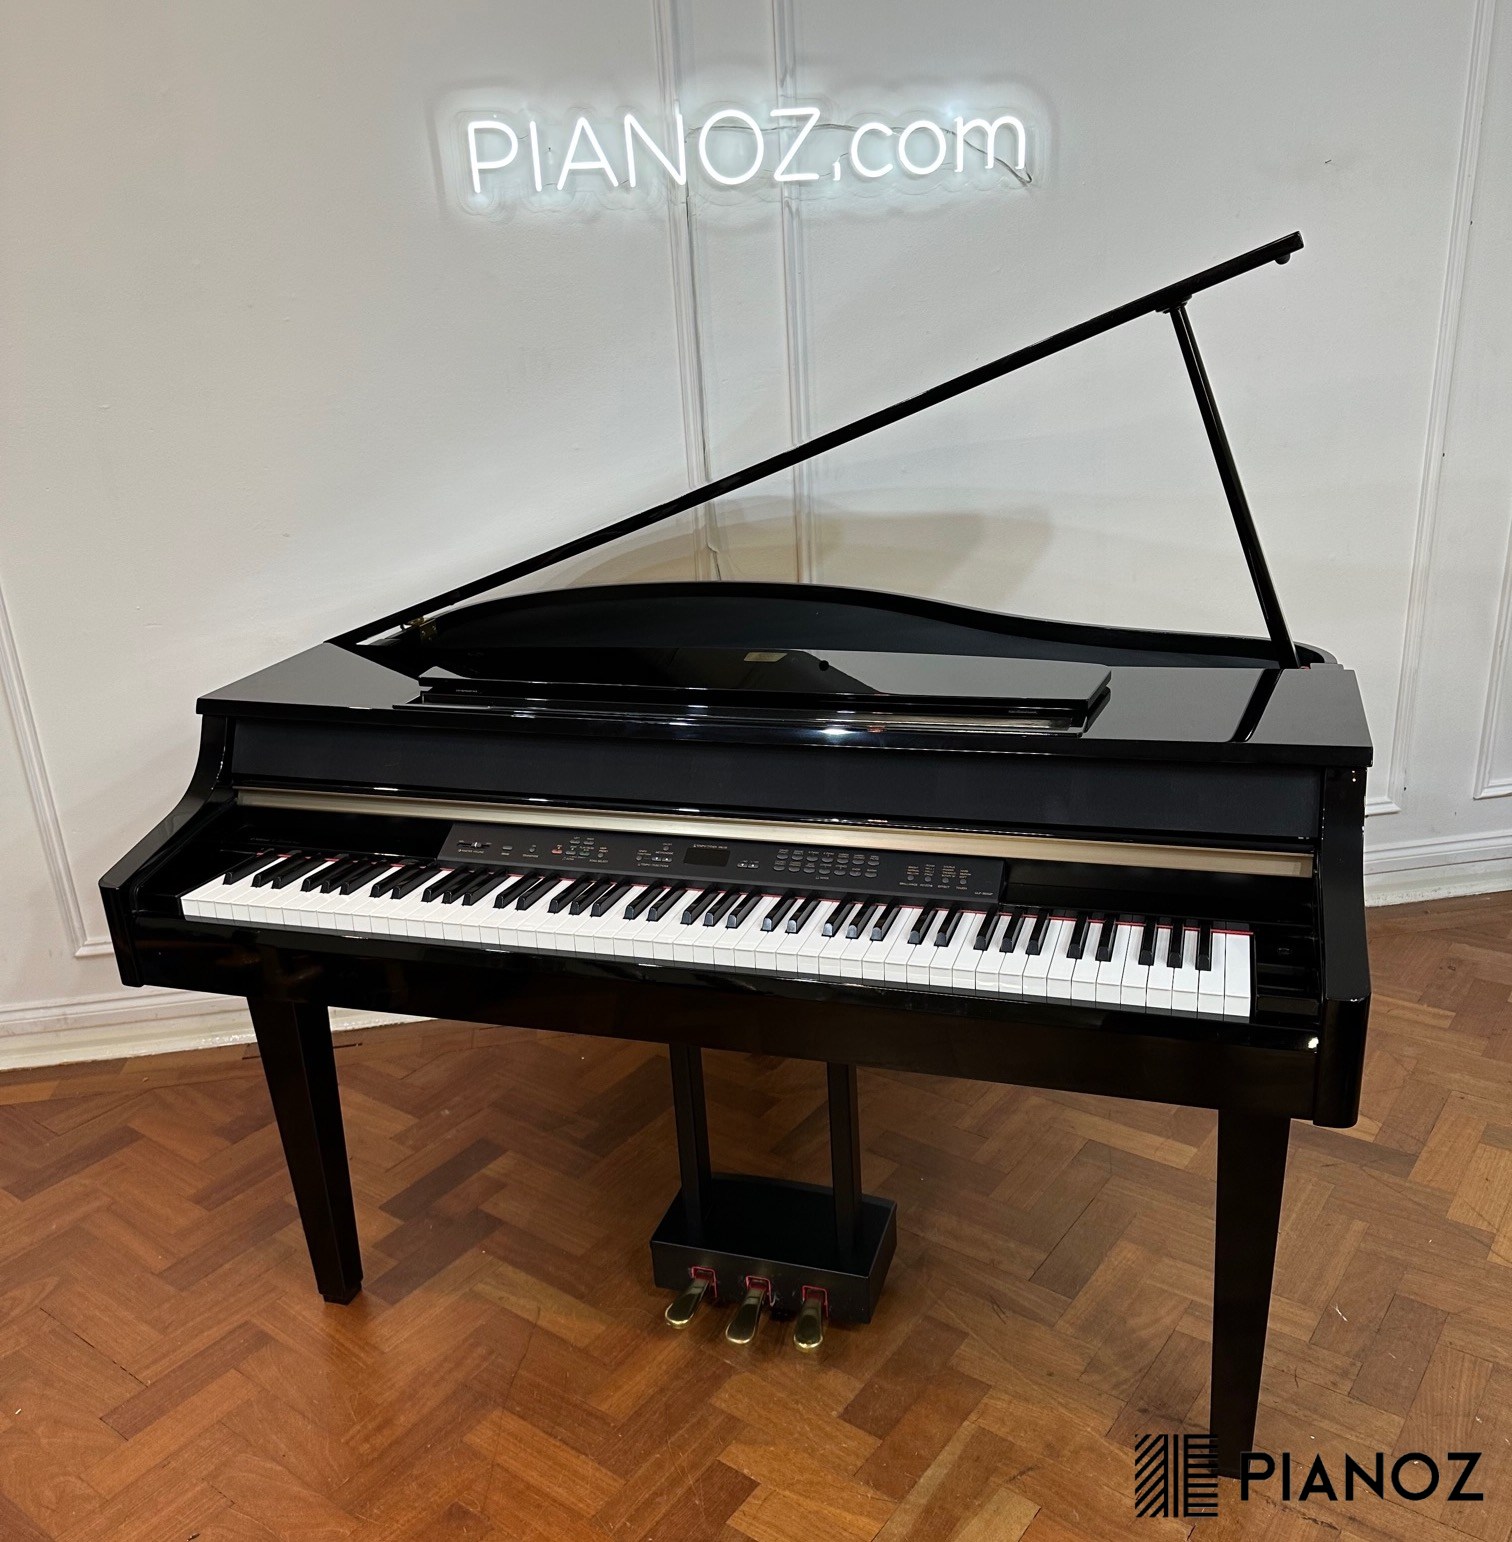 Yamaha Clavinova Baby Grand Digital Piano piano for sale in UK